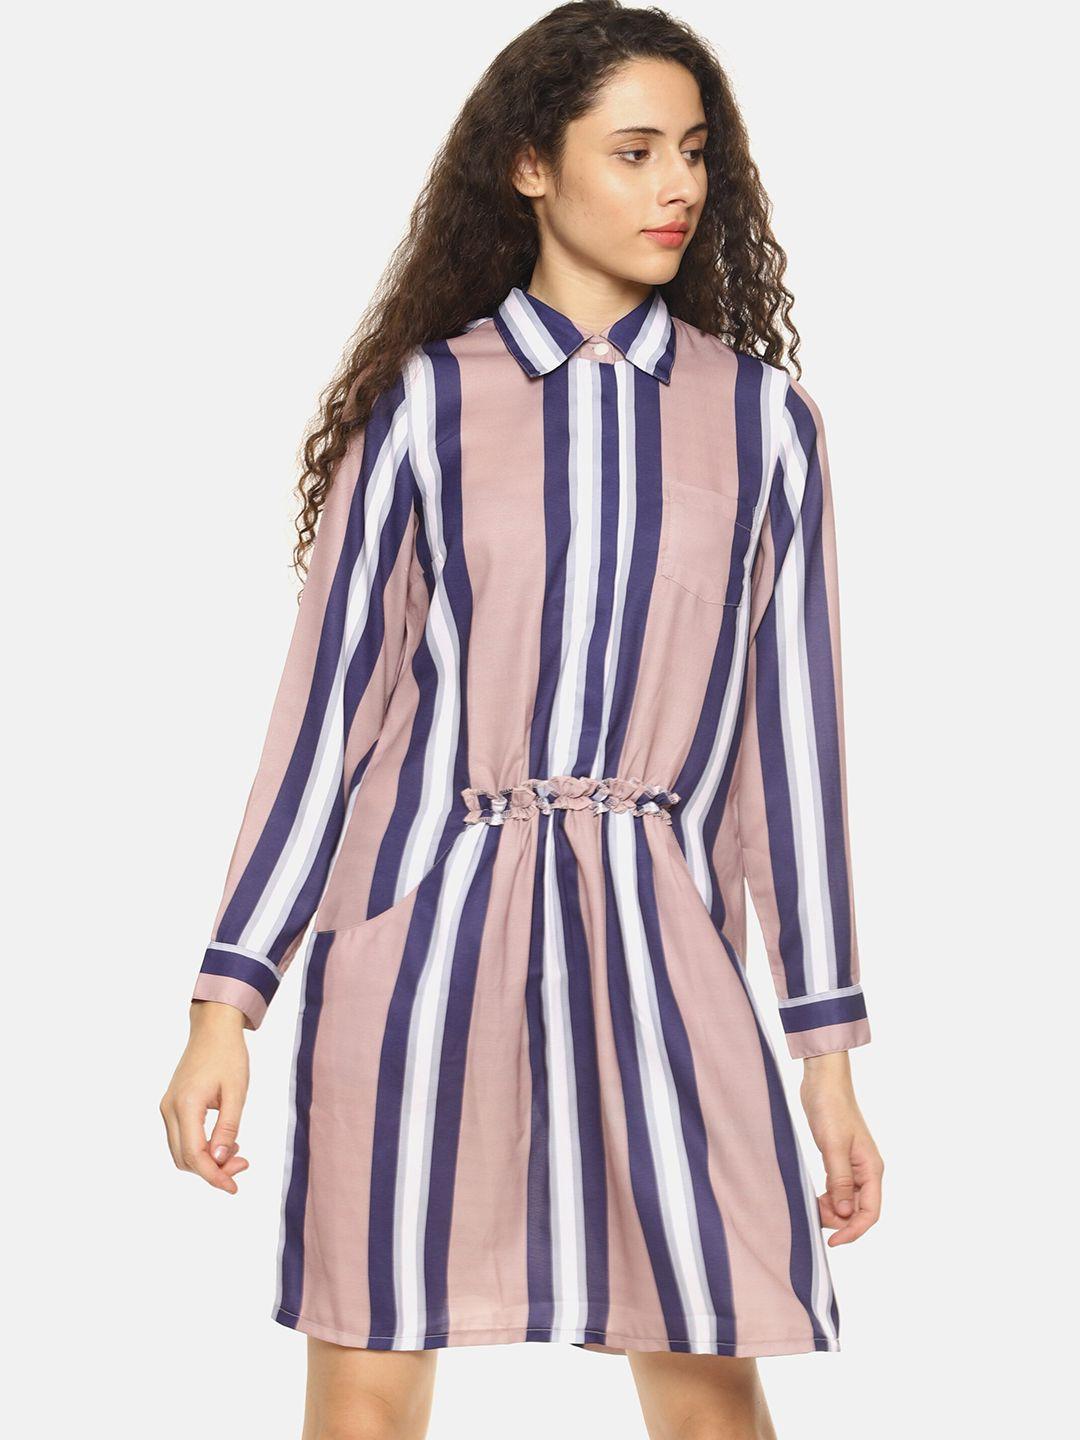 sahora pink striped crepe shirt dress